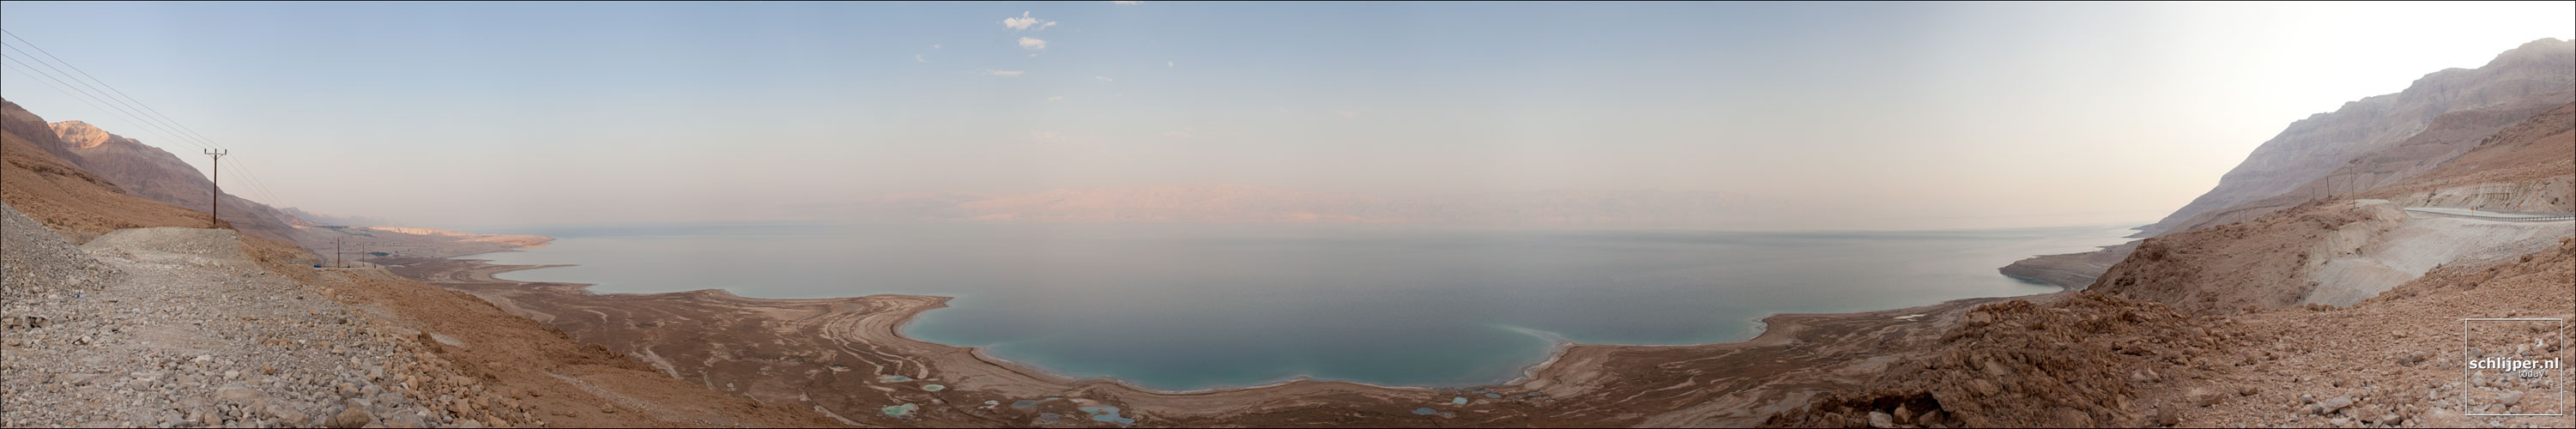 Israel, Dead Sea, 18 november 2010